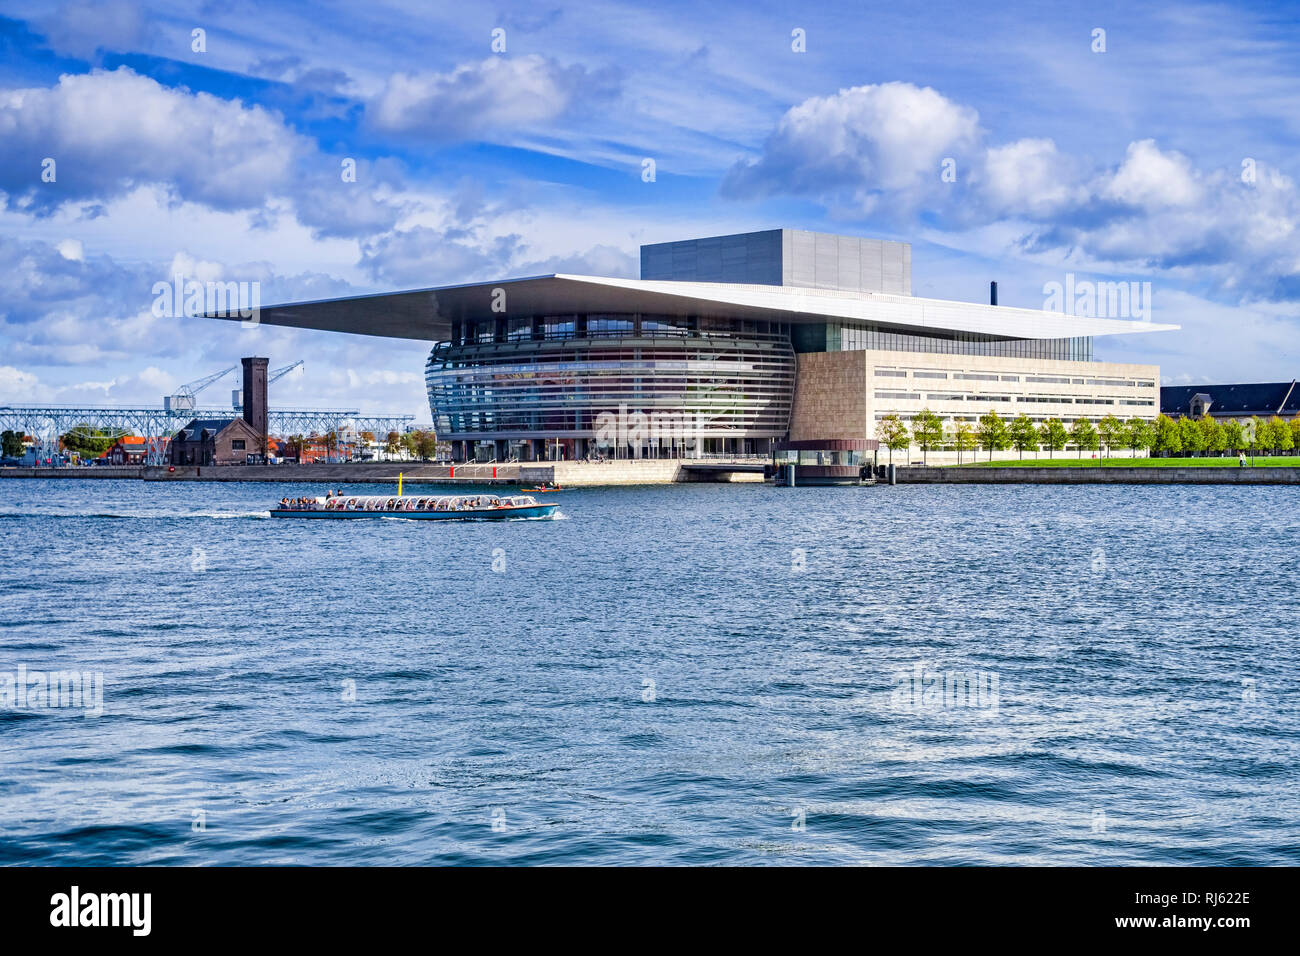 23 September 2018: Copenhagen, Denmark - The Copenhagen Opera House, or Operaen, on Holmen Island, with a tourist boat passing on the harbour. Stock Photo